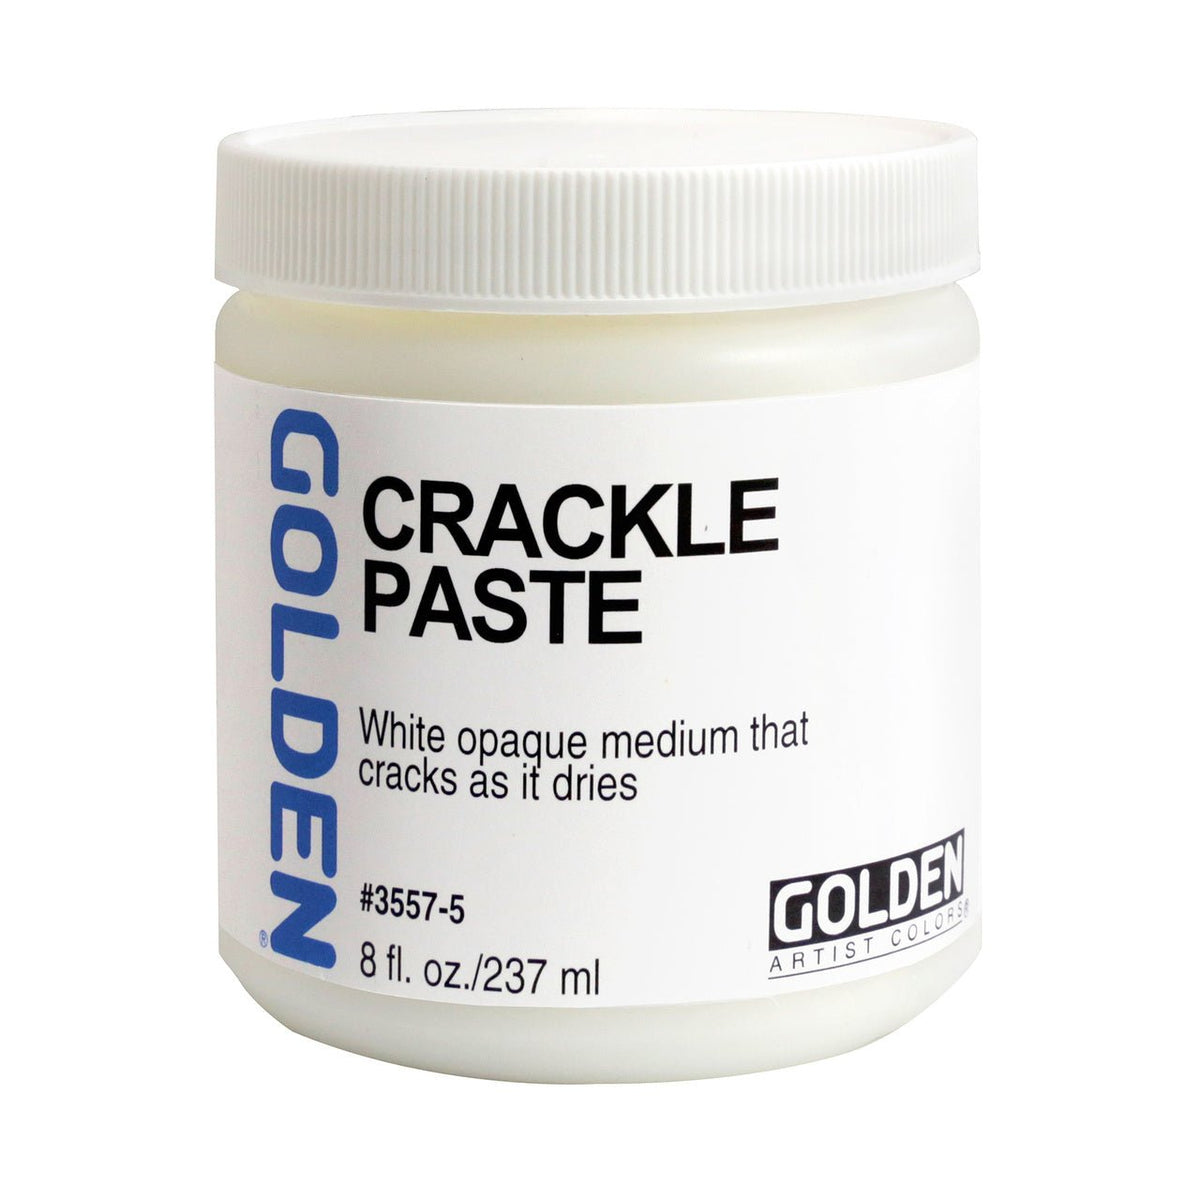 Golden Crackle Paste 8 oz - merriartist.com